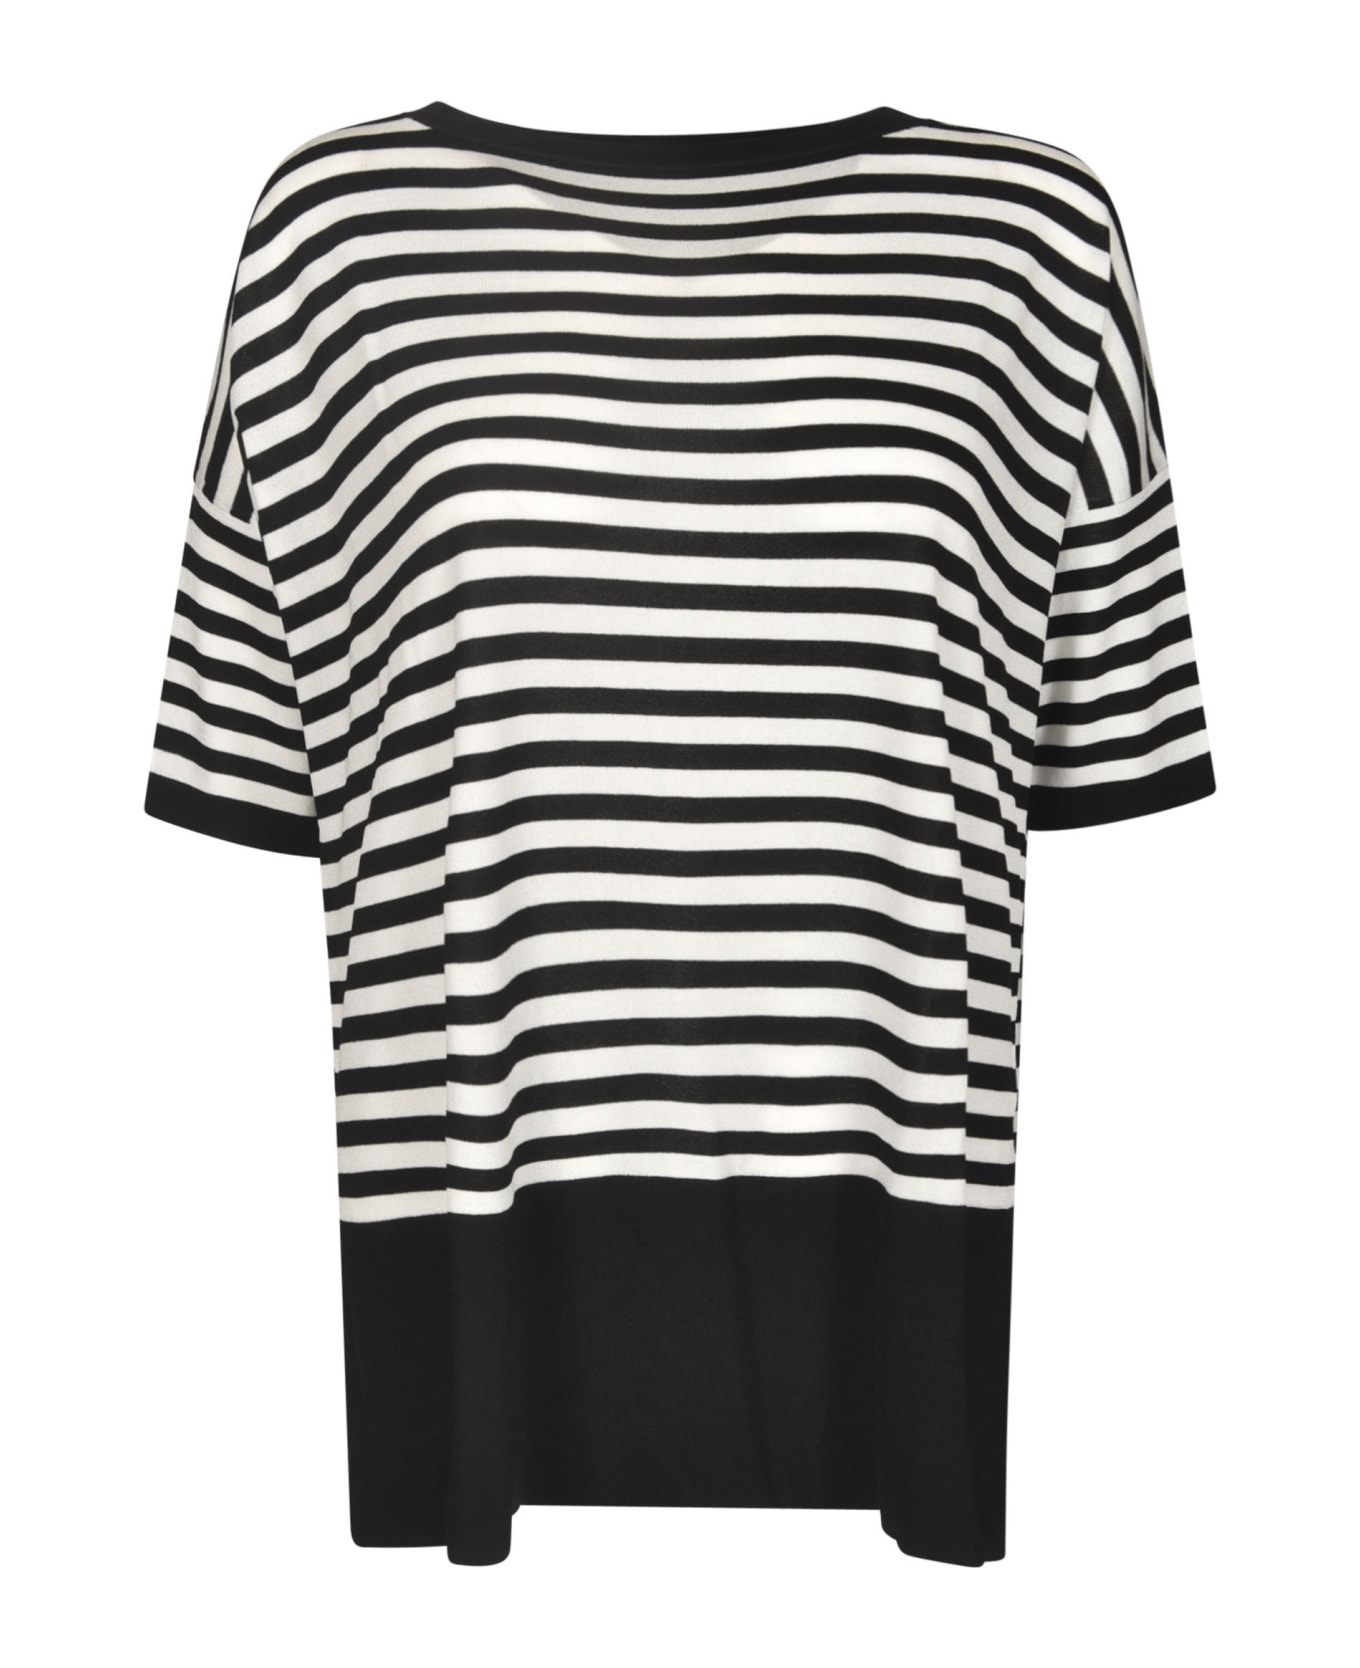 Wild Cashmere Striped T-shirt - White/Black